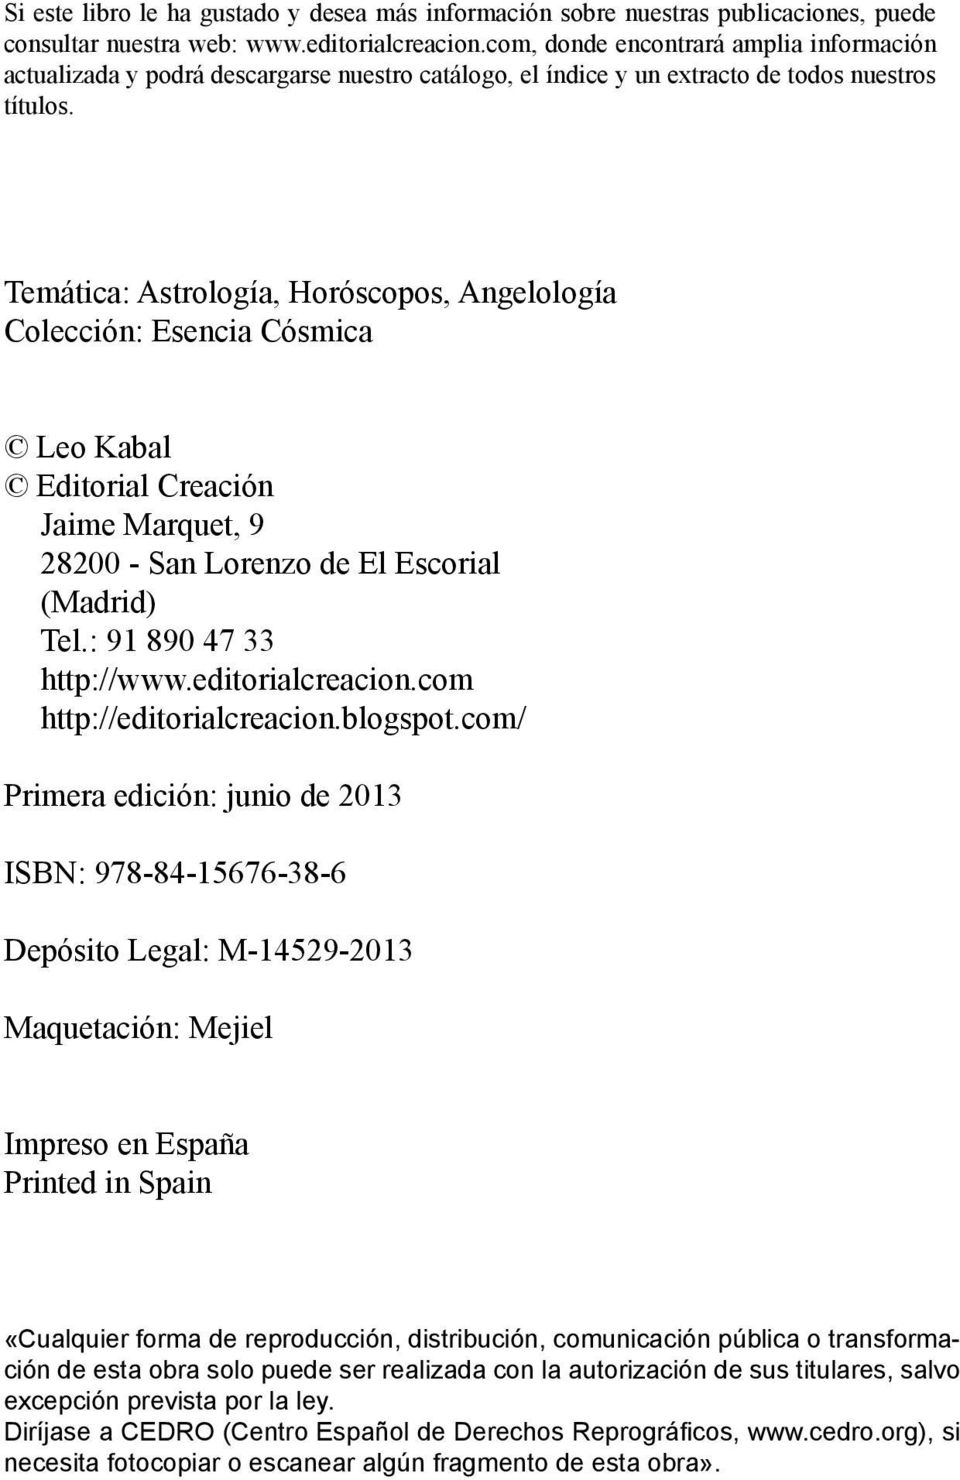 Temática: Astrología, Horóscopos, Angelología Colección: Esencia Cósmica Leo Kabal Editorial Creación Jaime Marquet, 9 28200 - San Lorenzo de El Escorial (Madrid) Tel.: 91 890 47 33 http://www.